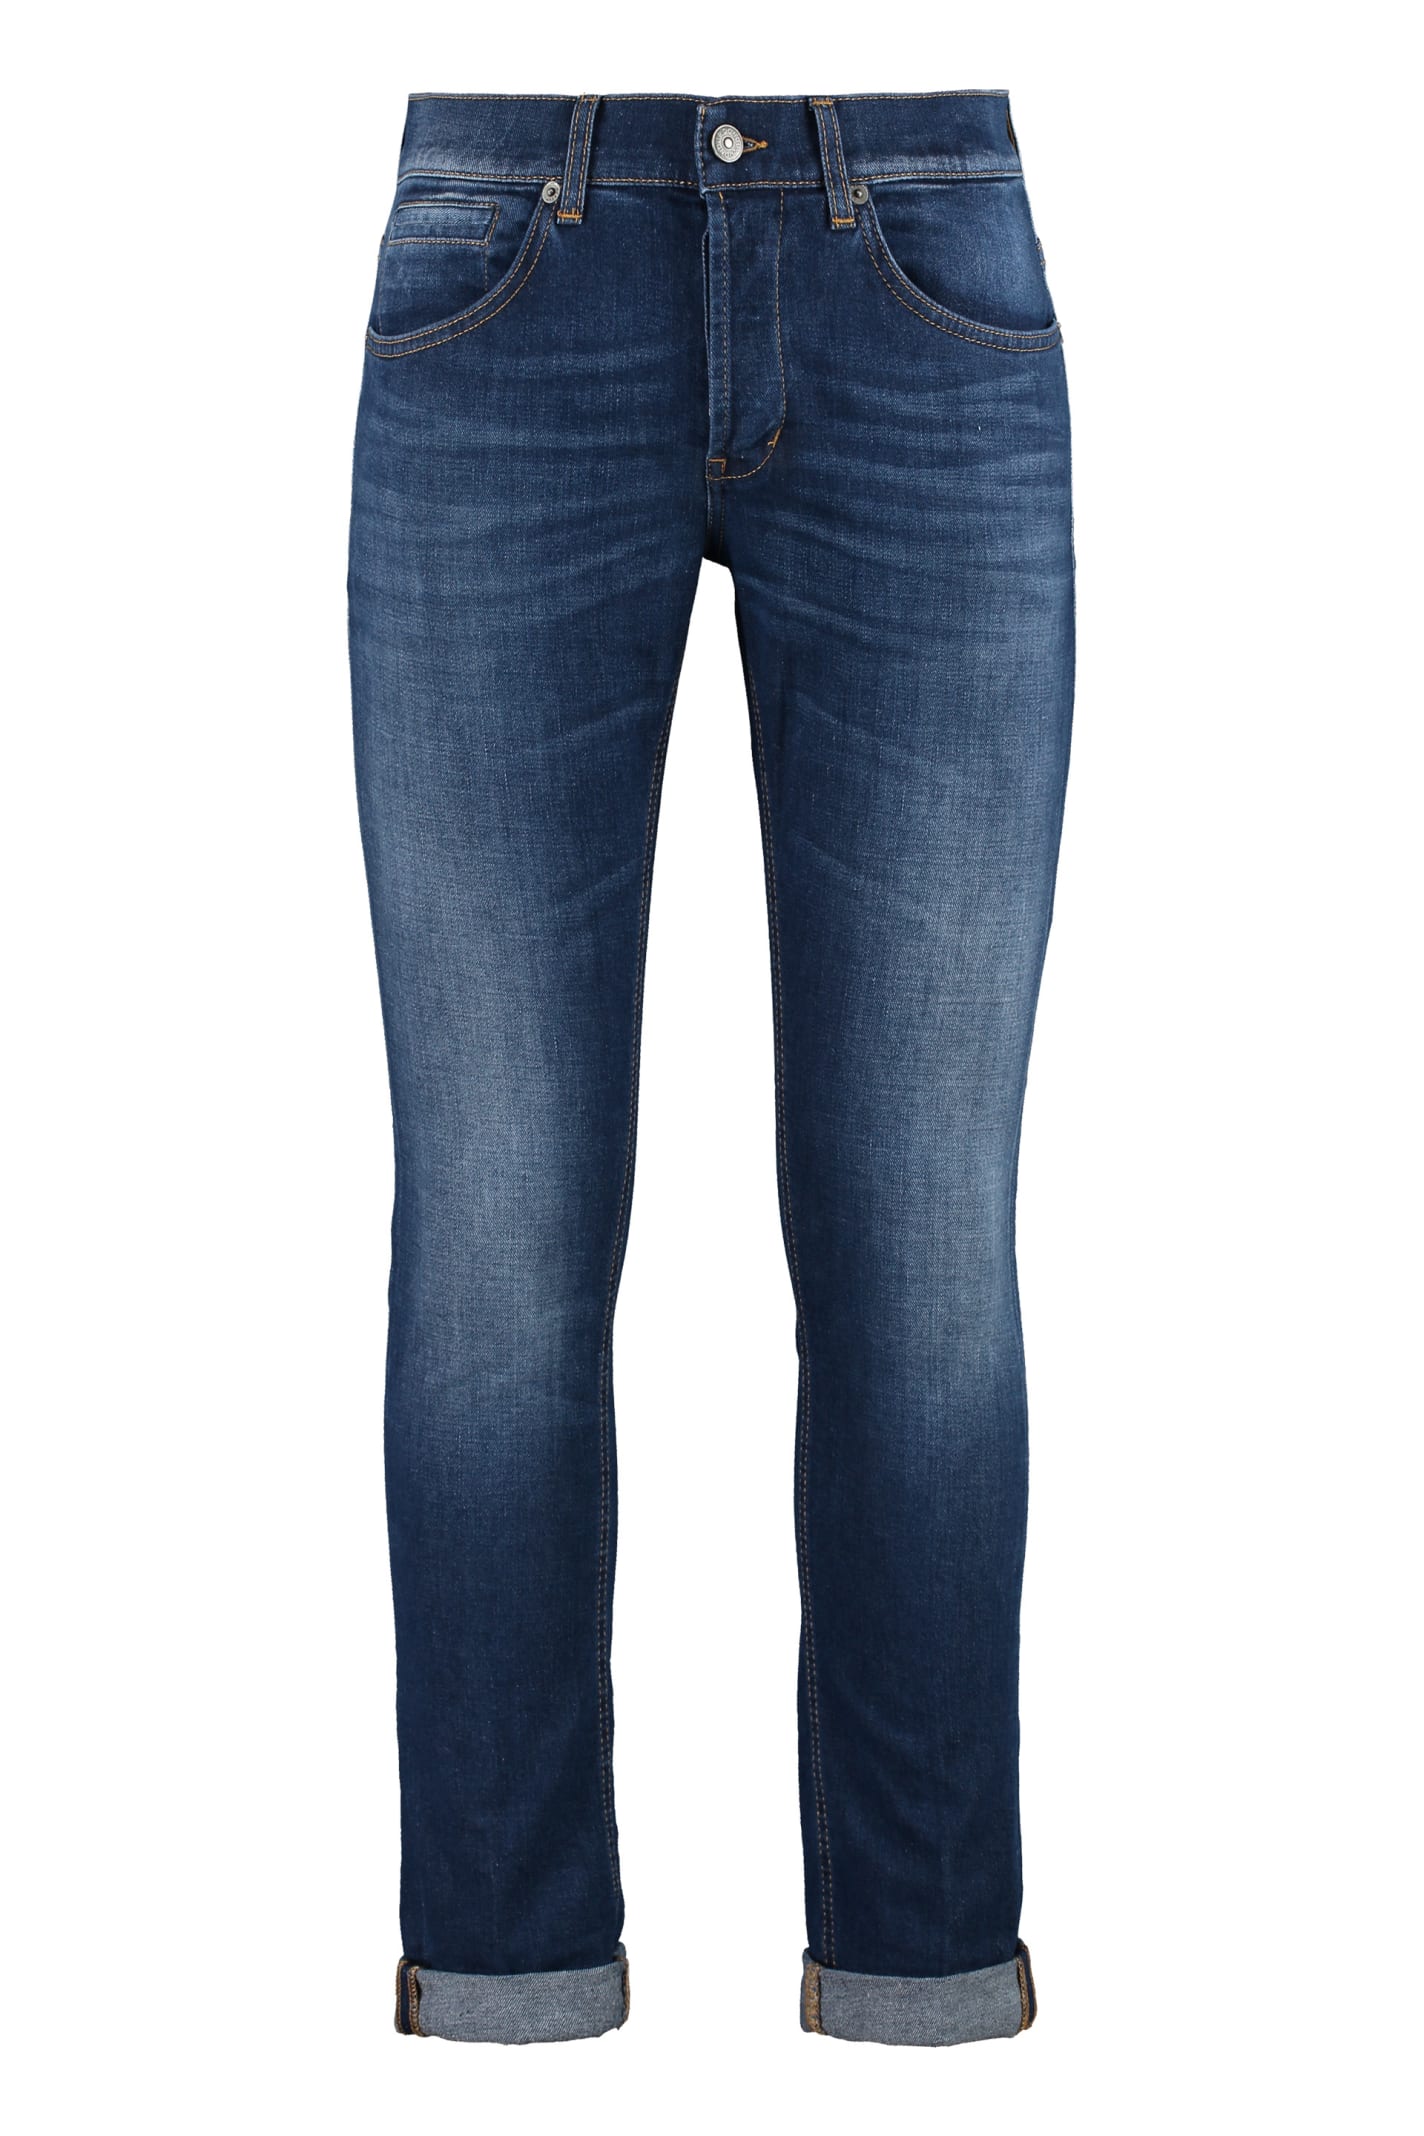 George 5-pocket Jeans